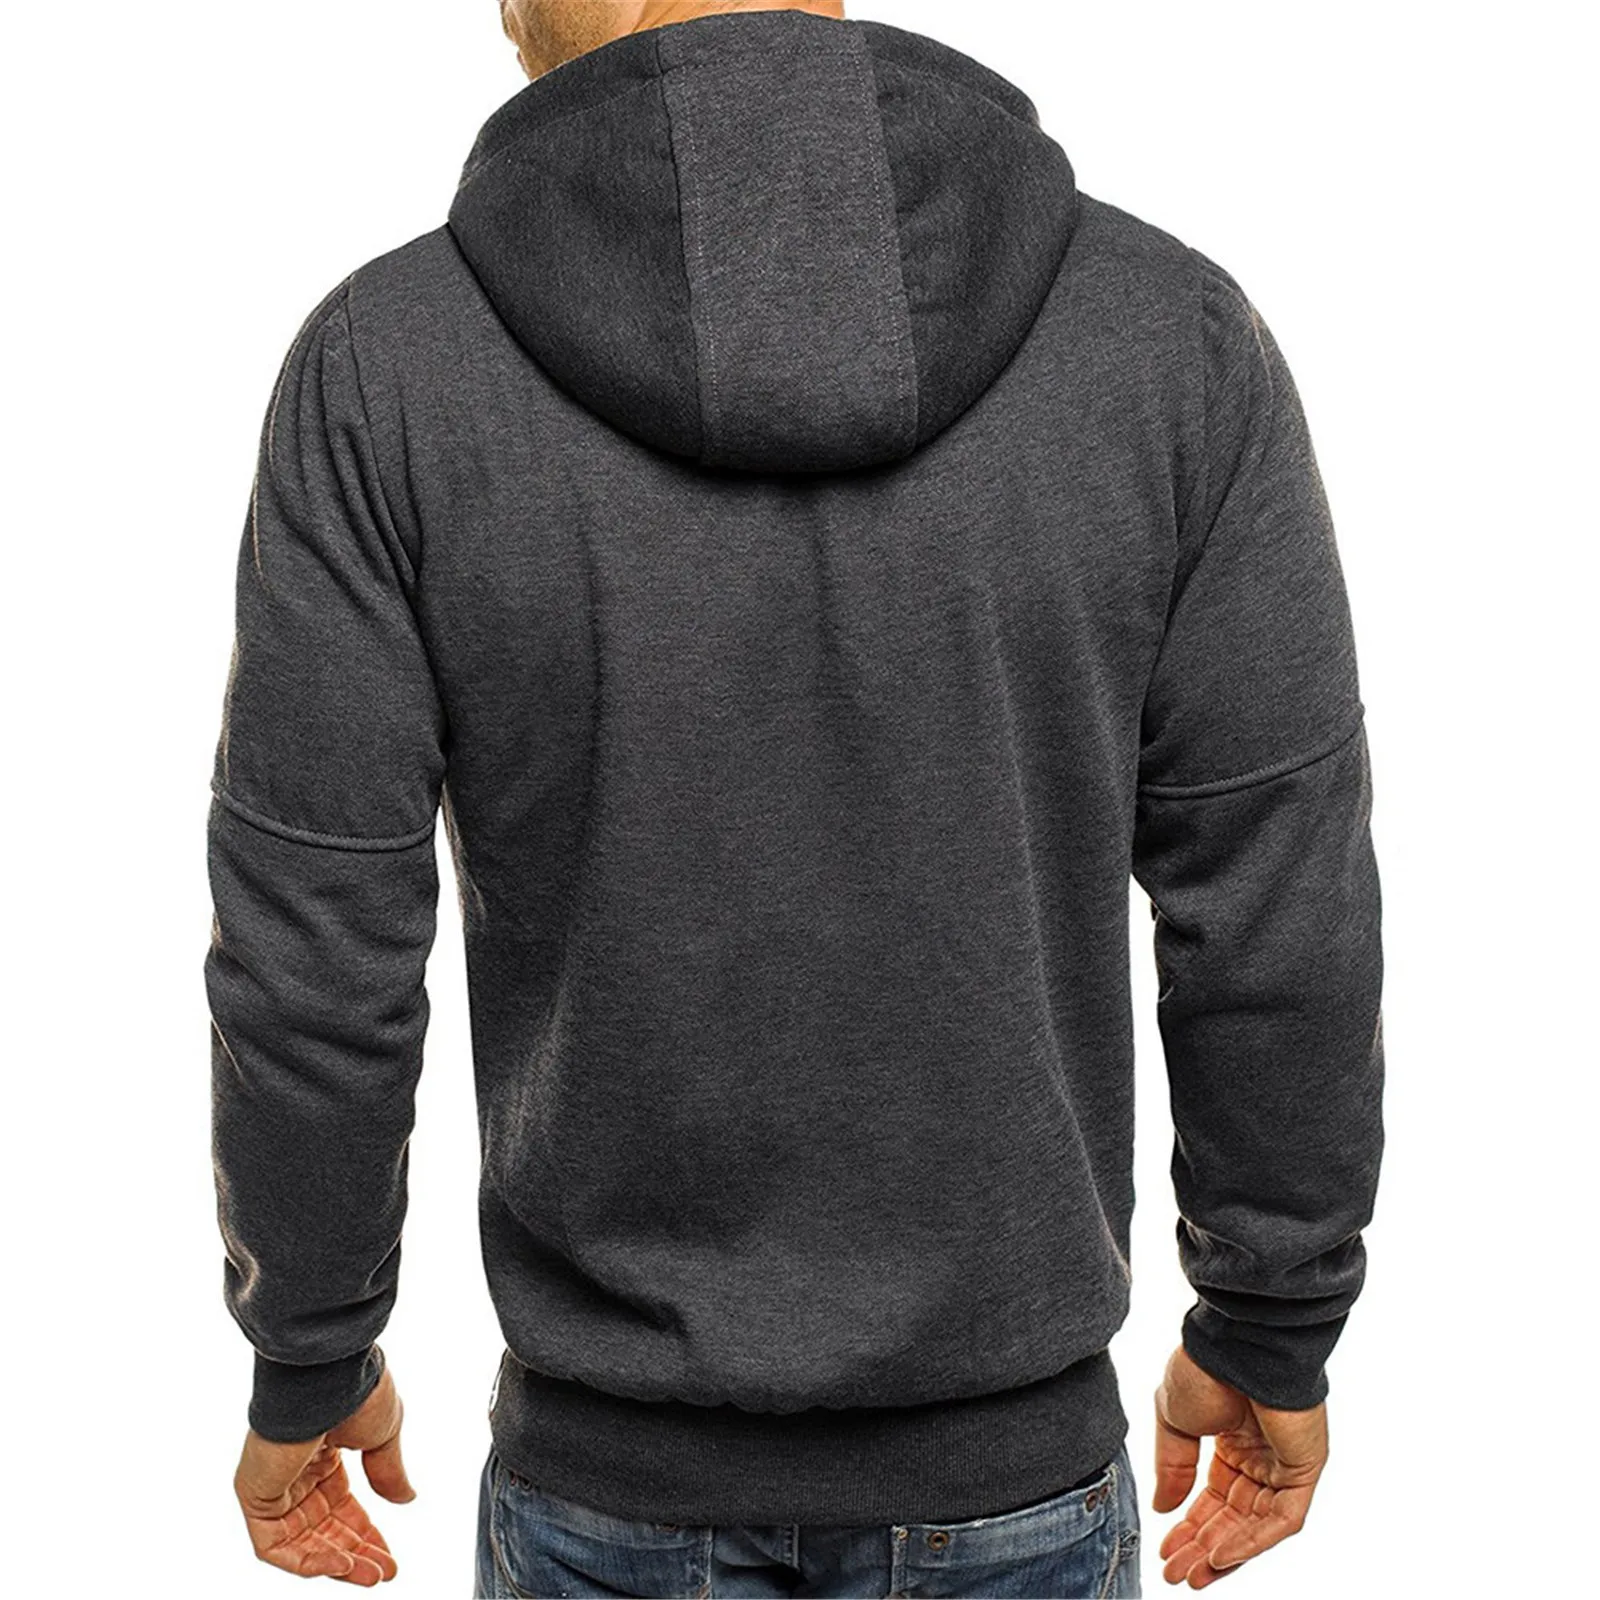 GRT Fitness He8c441980e96434b8e08a0aa1f0ca308I New 2021 Men's Splice Cap with Long Sleeve Zip Sweater Tops Sweatshirt Outwear Warm Hoodie 